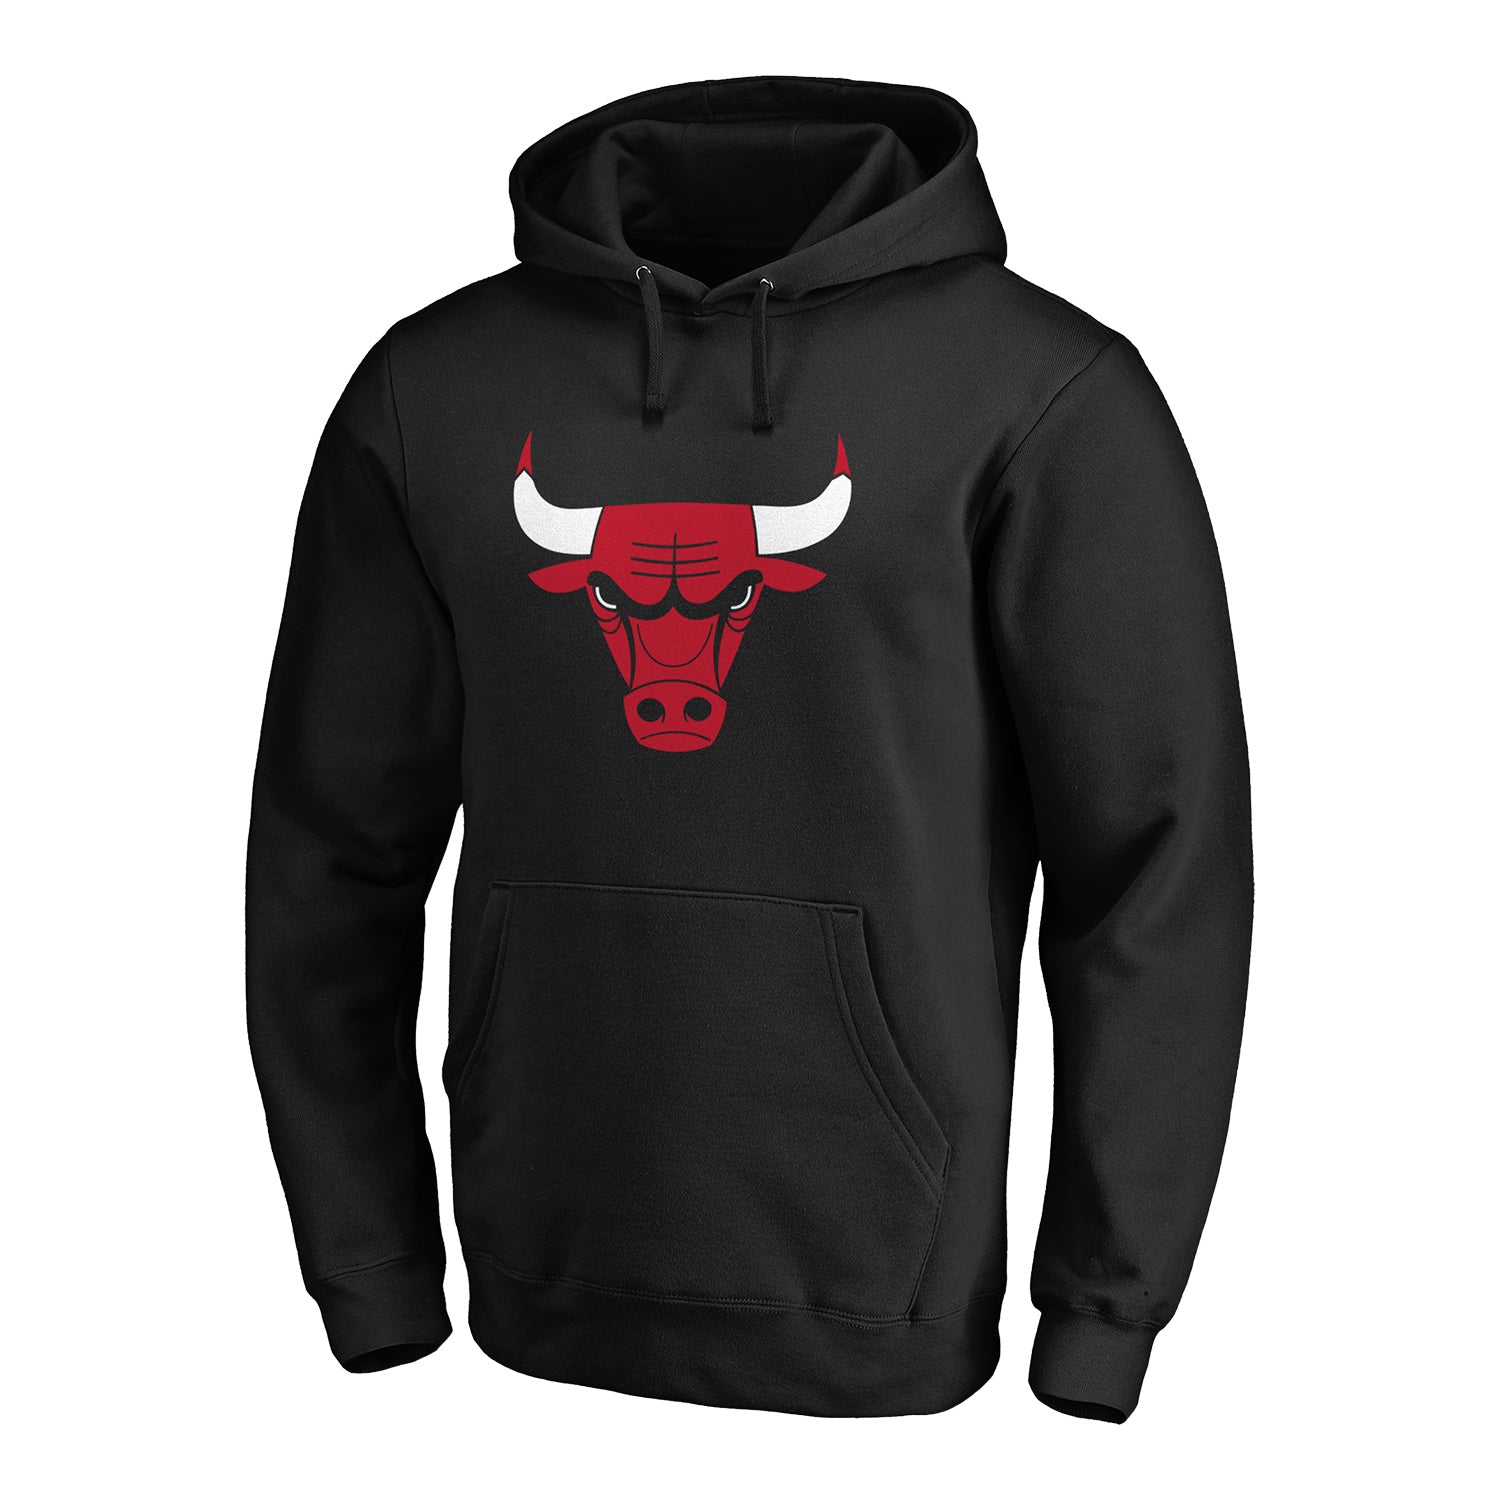 Chicago Bulls Fanatics Branded Mono Logo Graphic Oversized T-Shirt